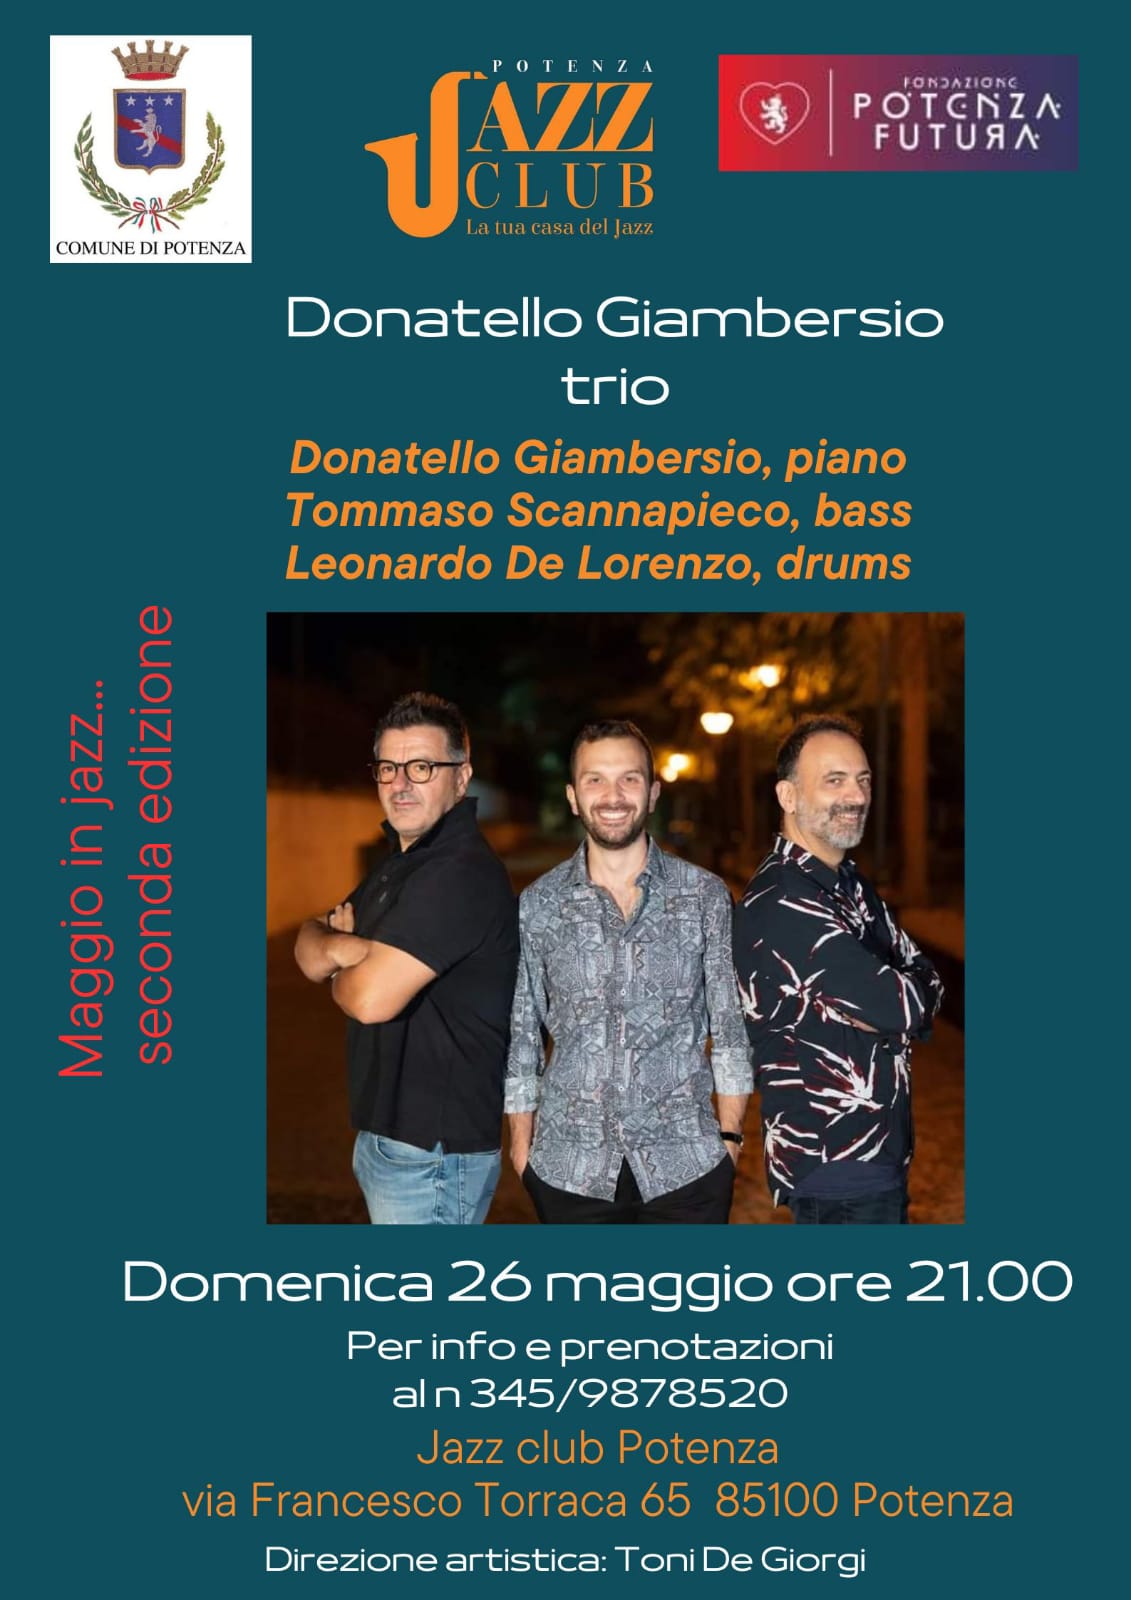 Donatello Giambersio trio